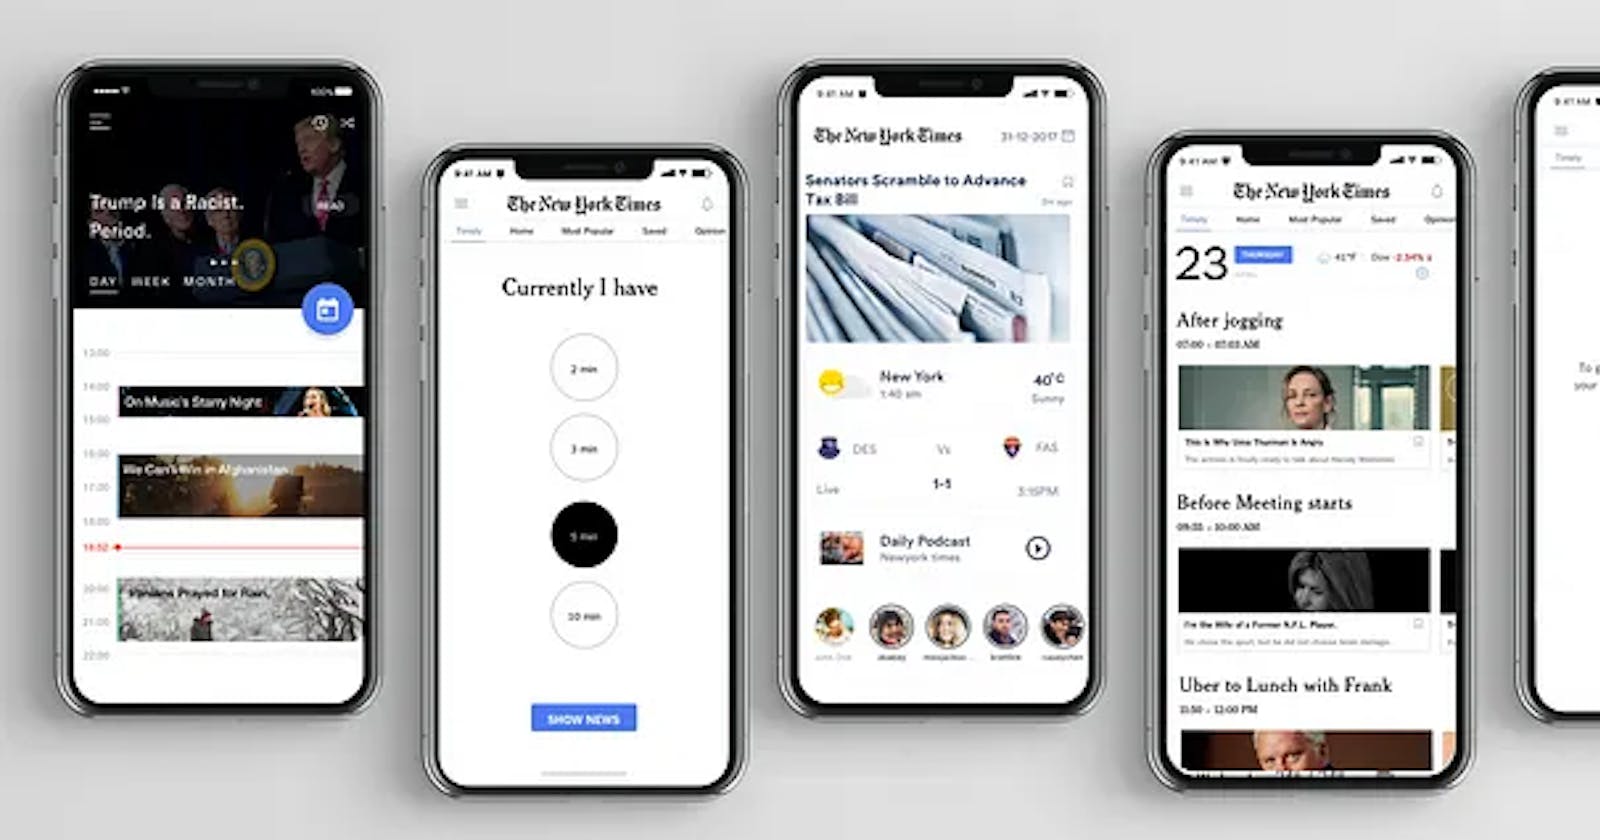 The New York Times app— a design revamp case study.